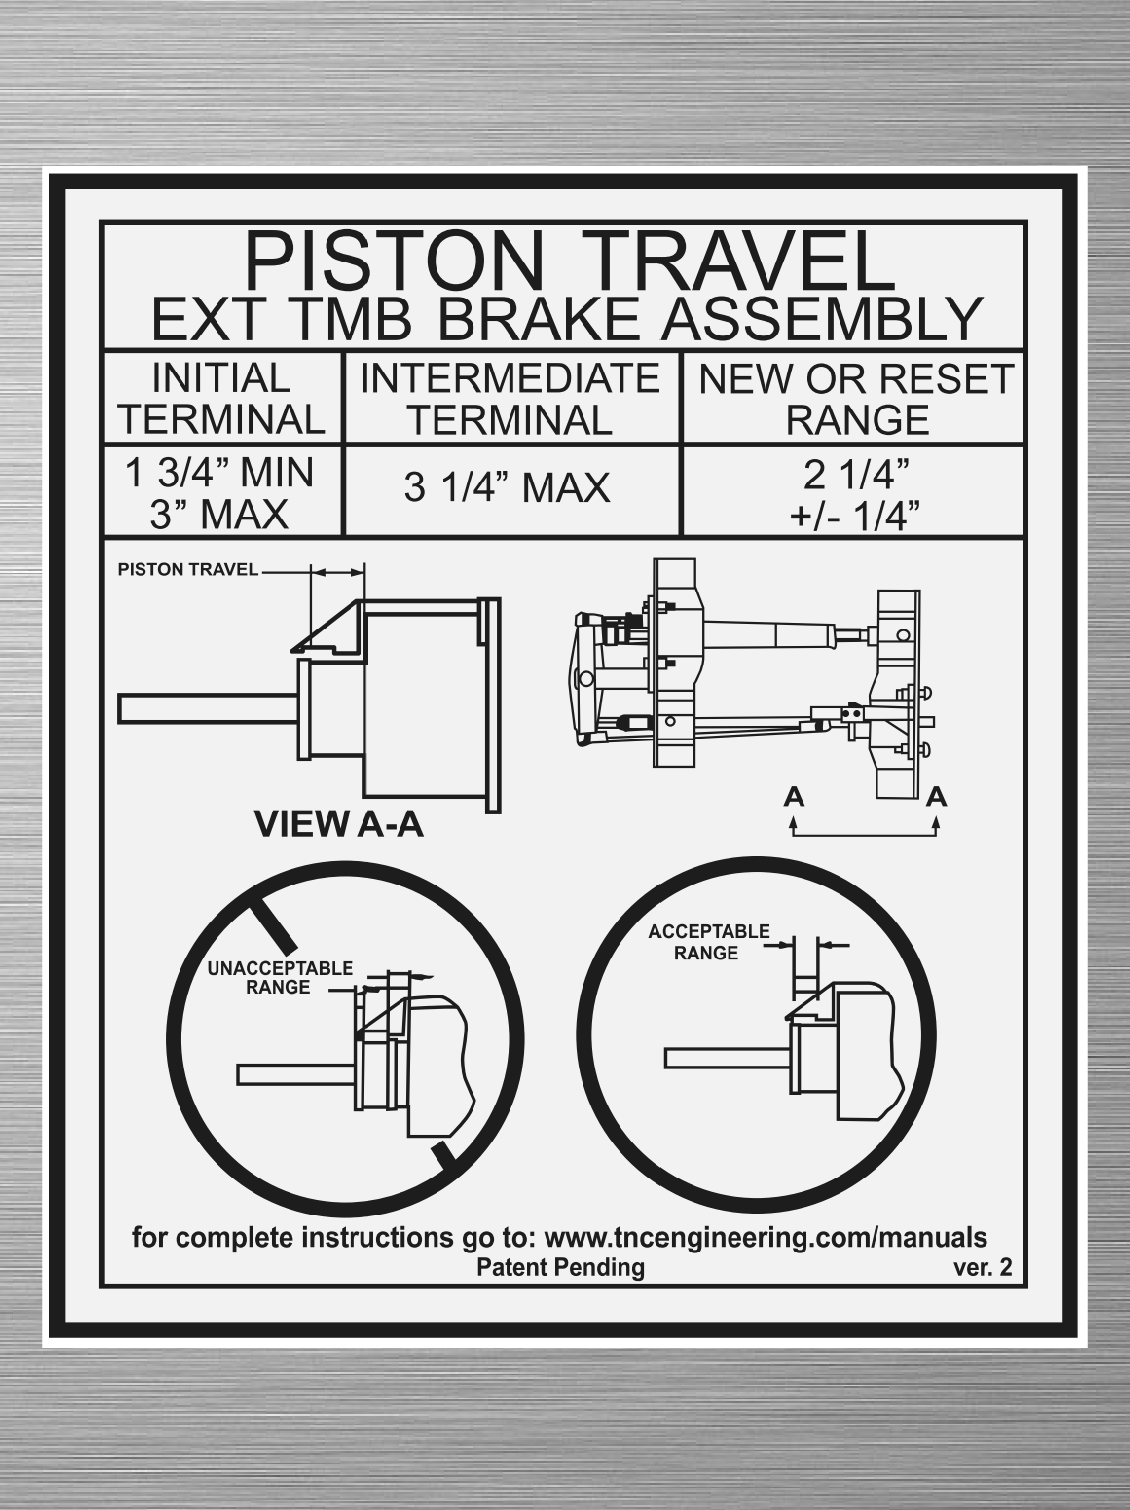 Piston Travel Decal -  EXT TMB Brake Assembly